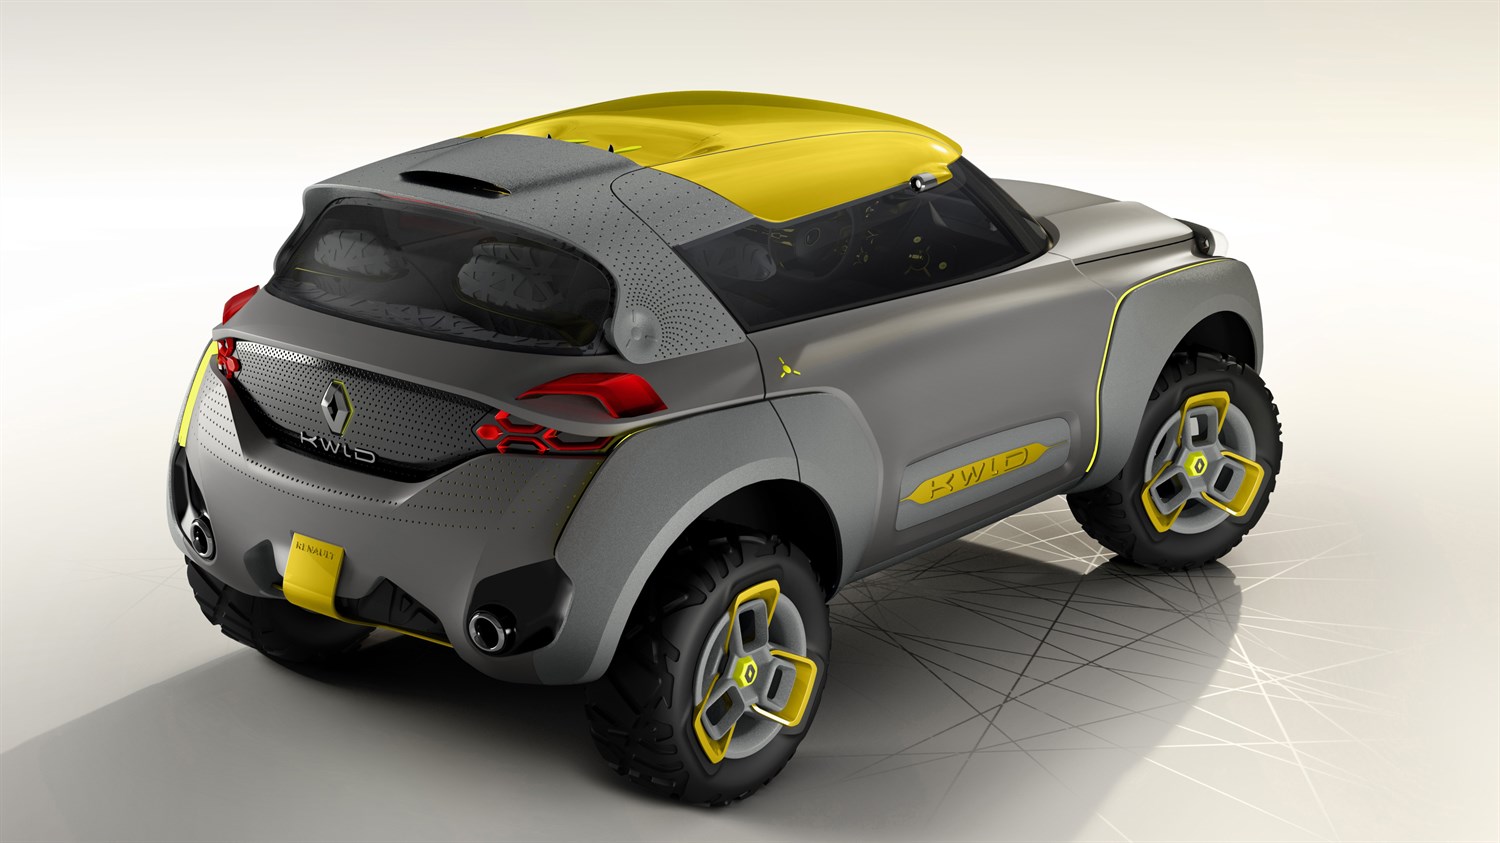 Renault Concept Cars Range